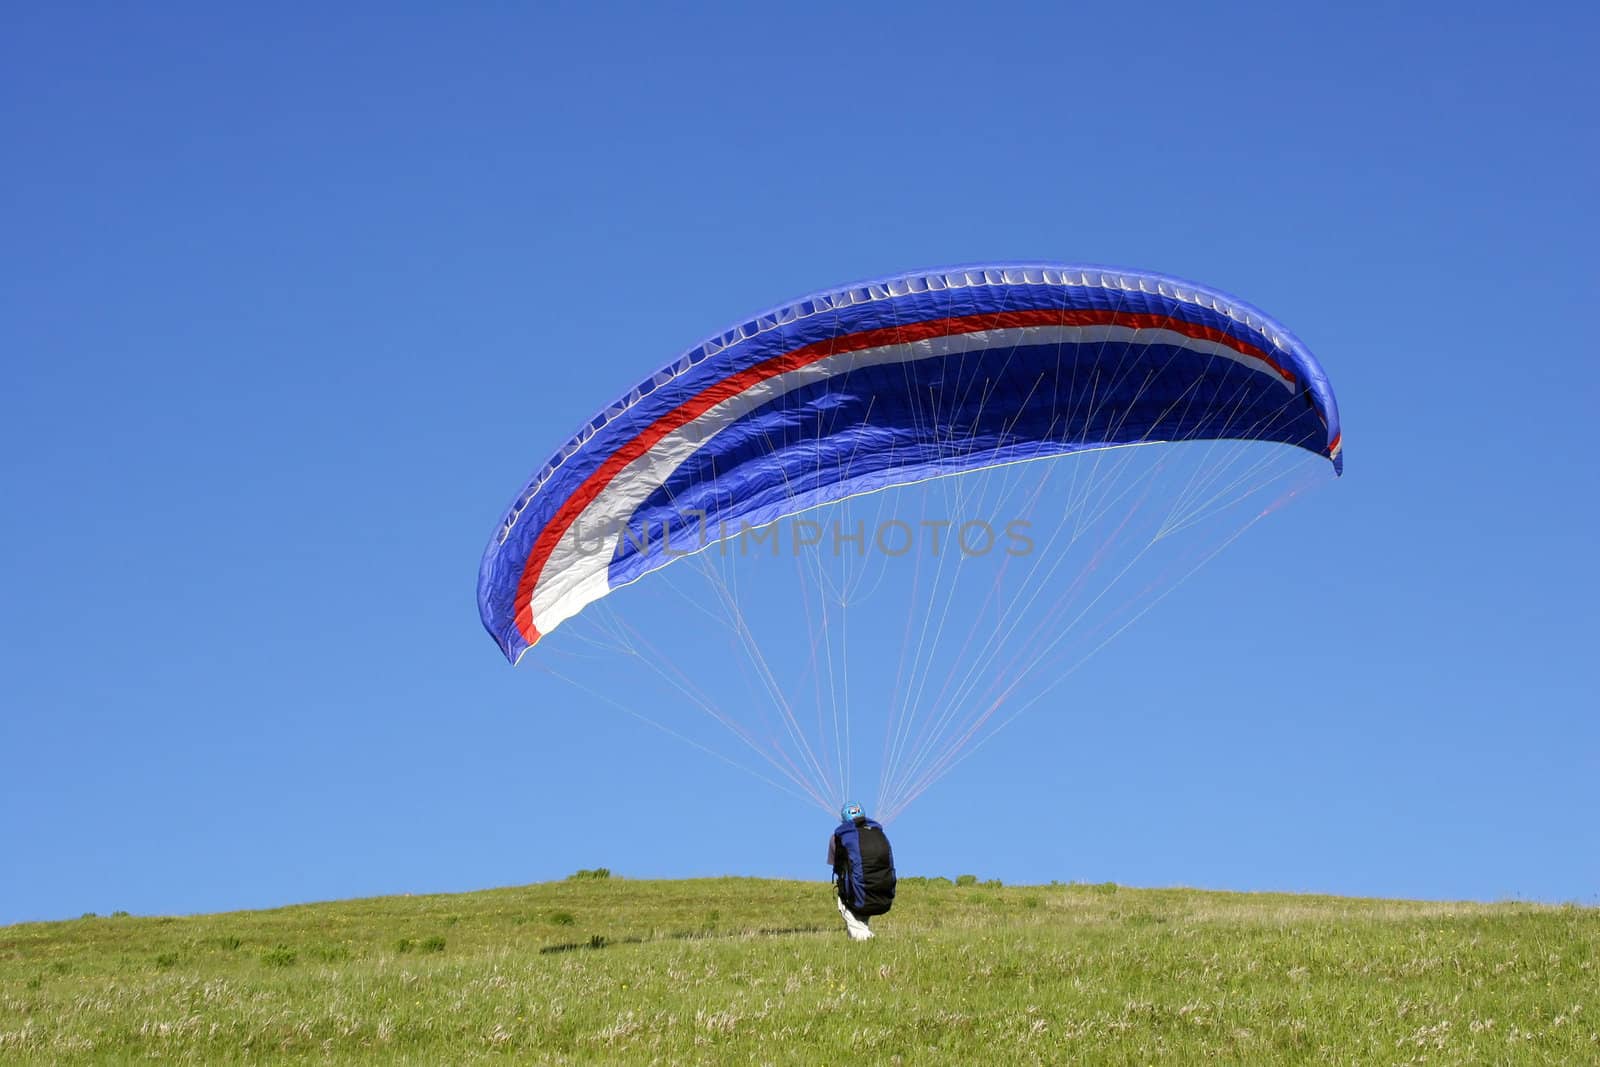 Paraglider take off against a blue sky